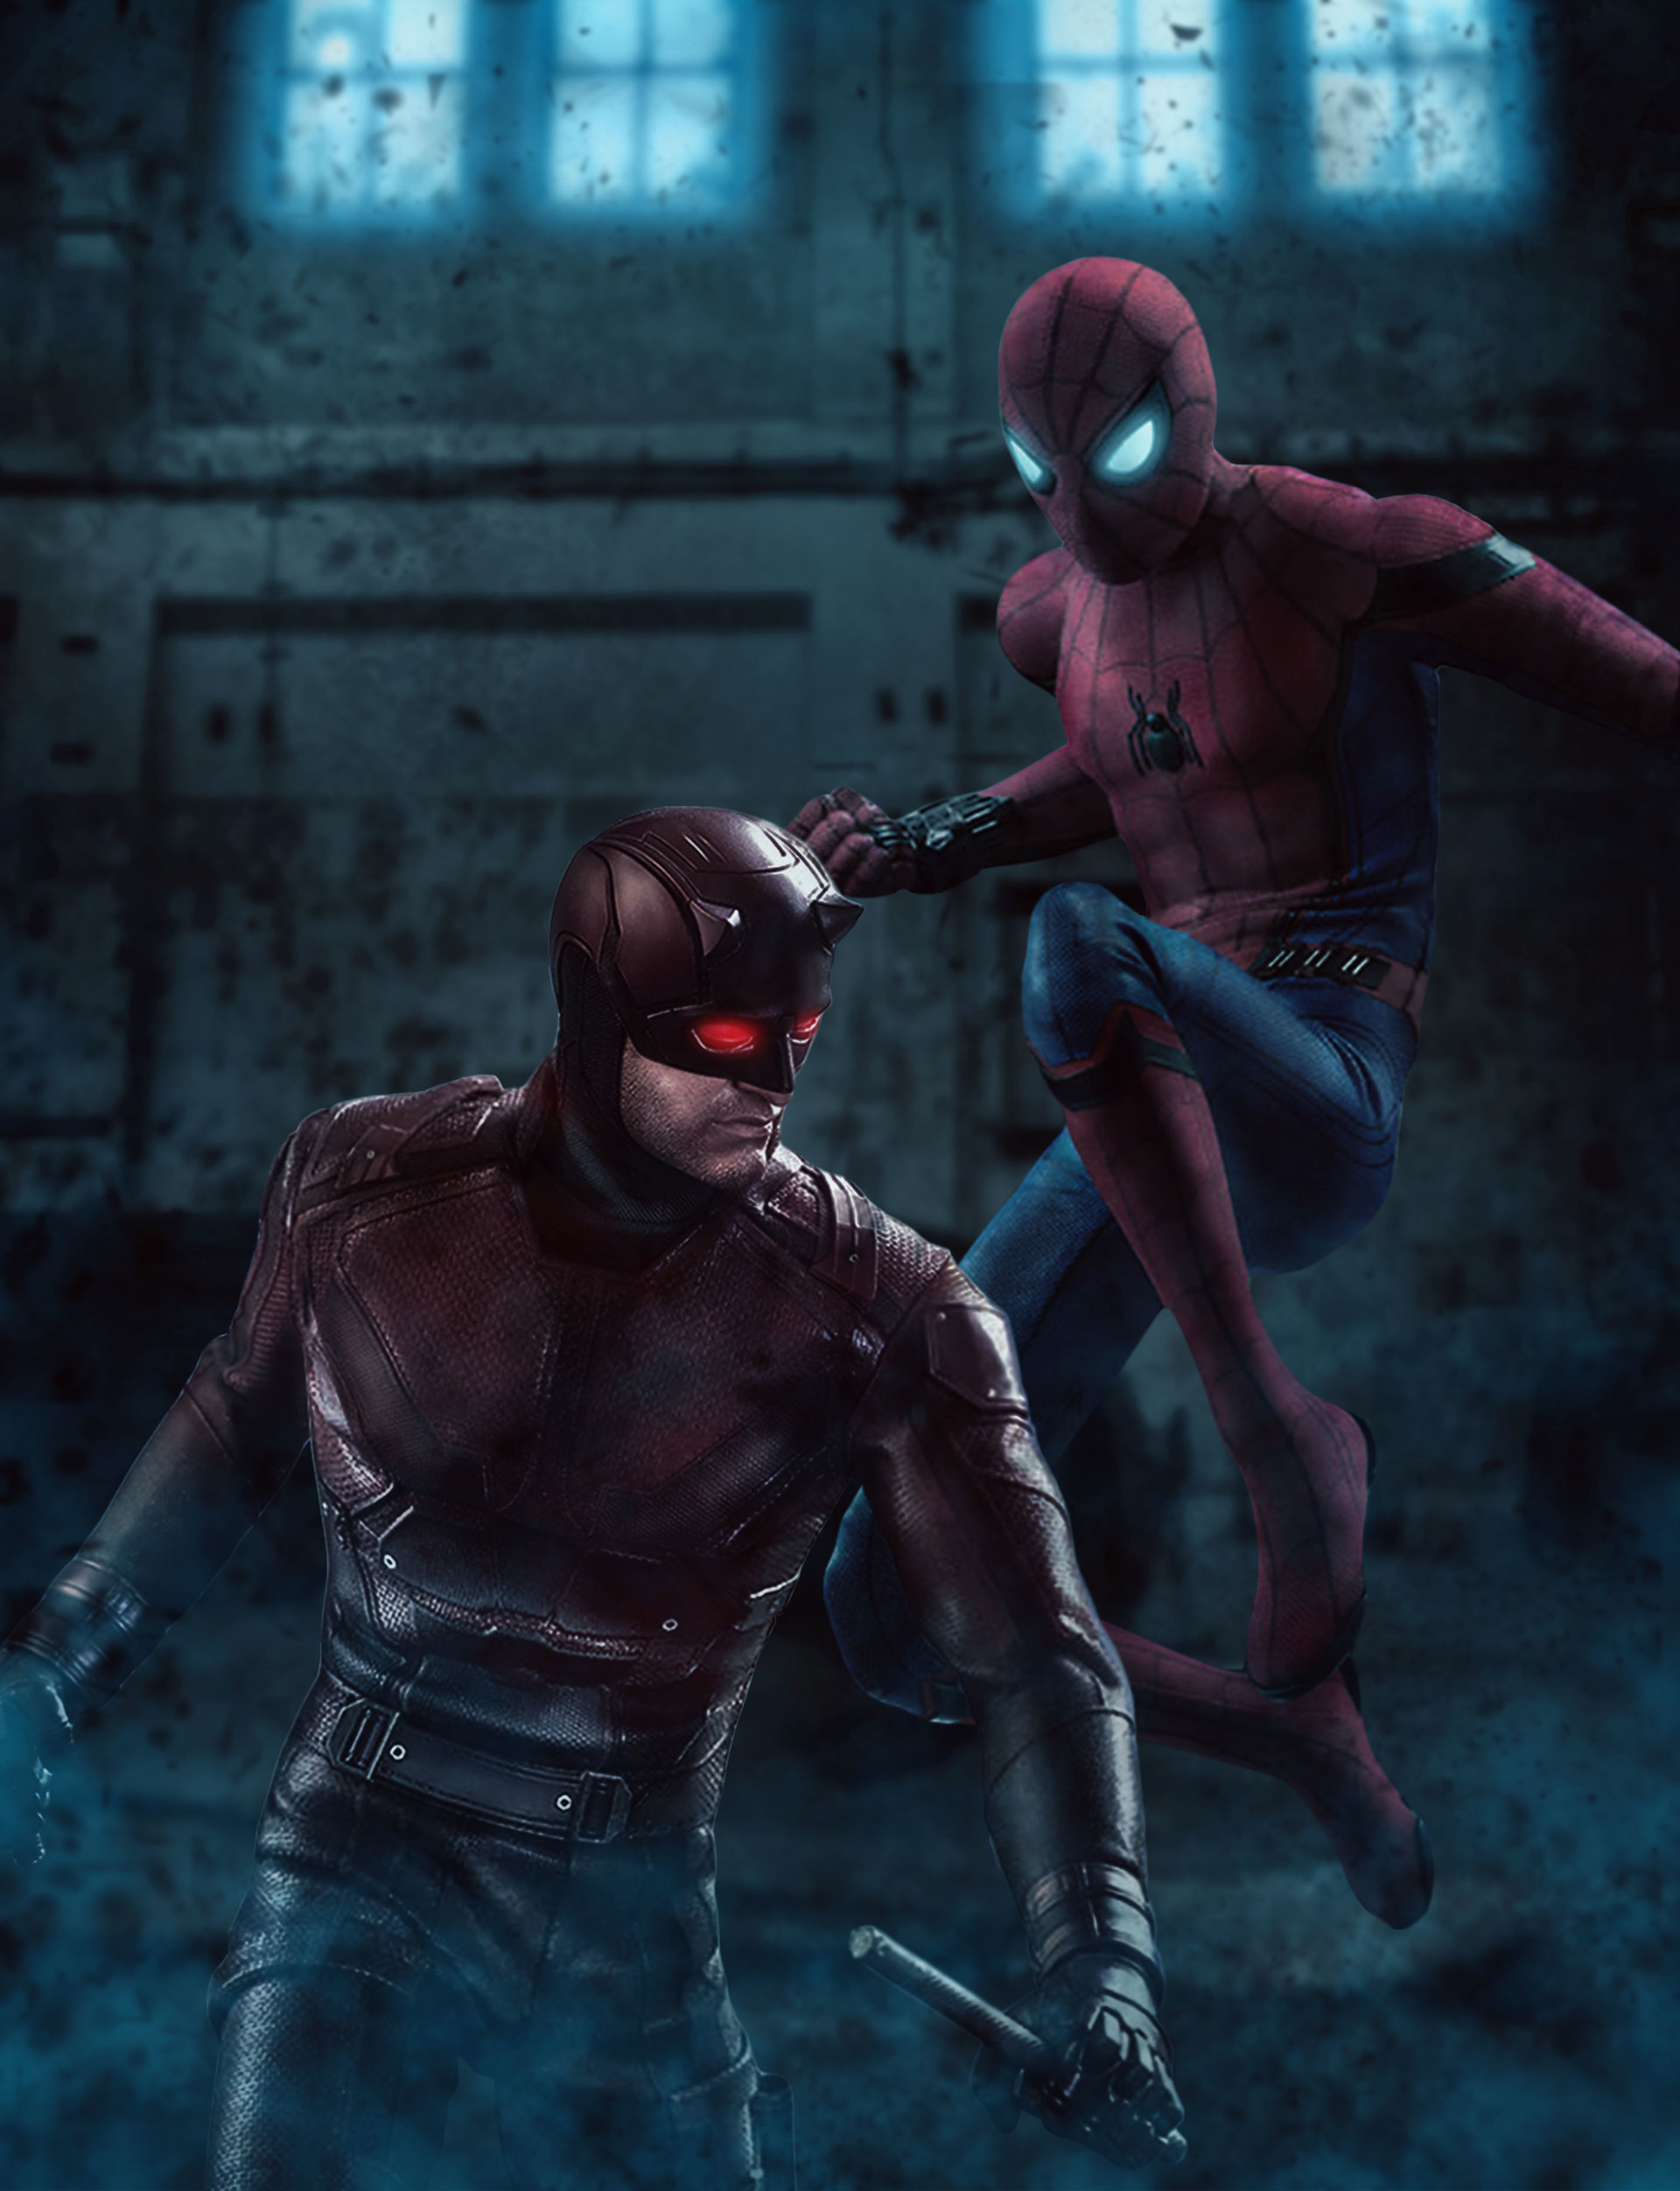 ArtStation - Spider-Man v Daredevil